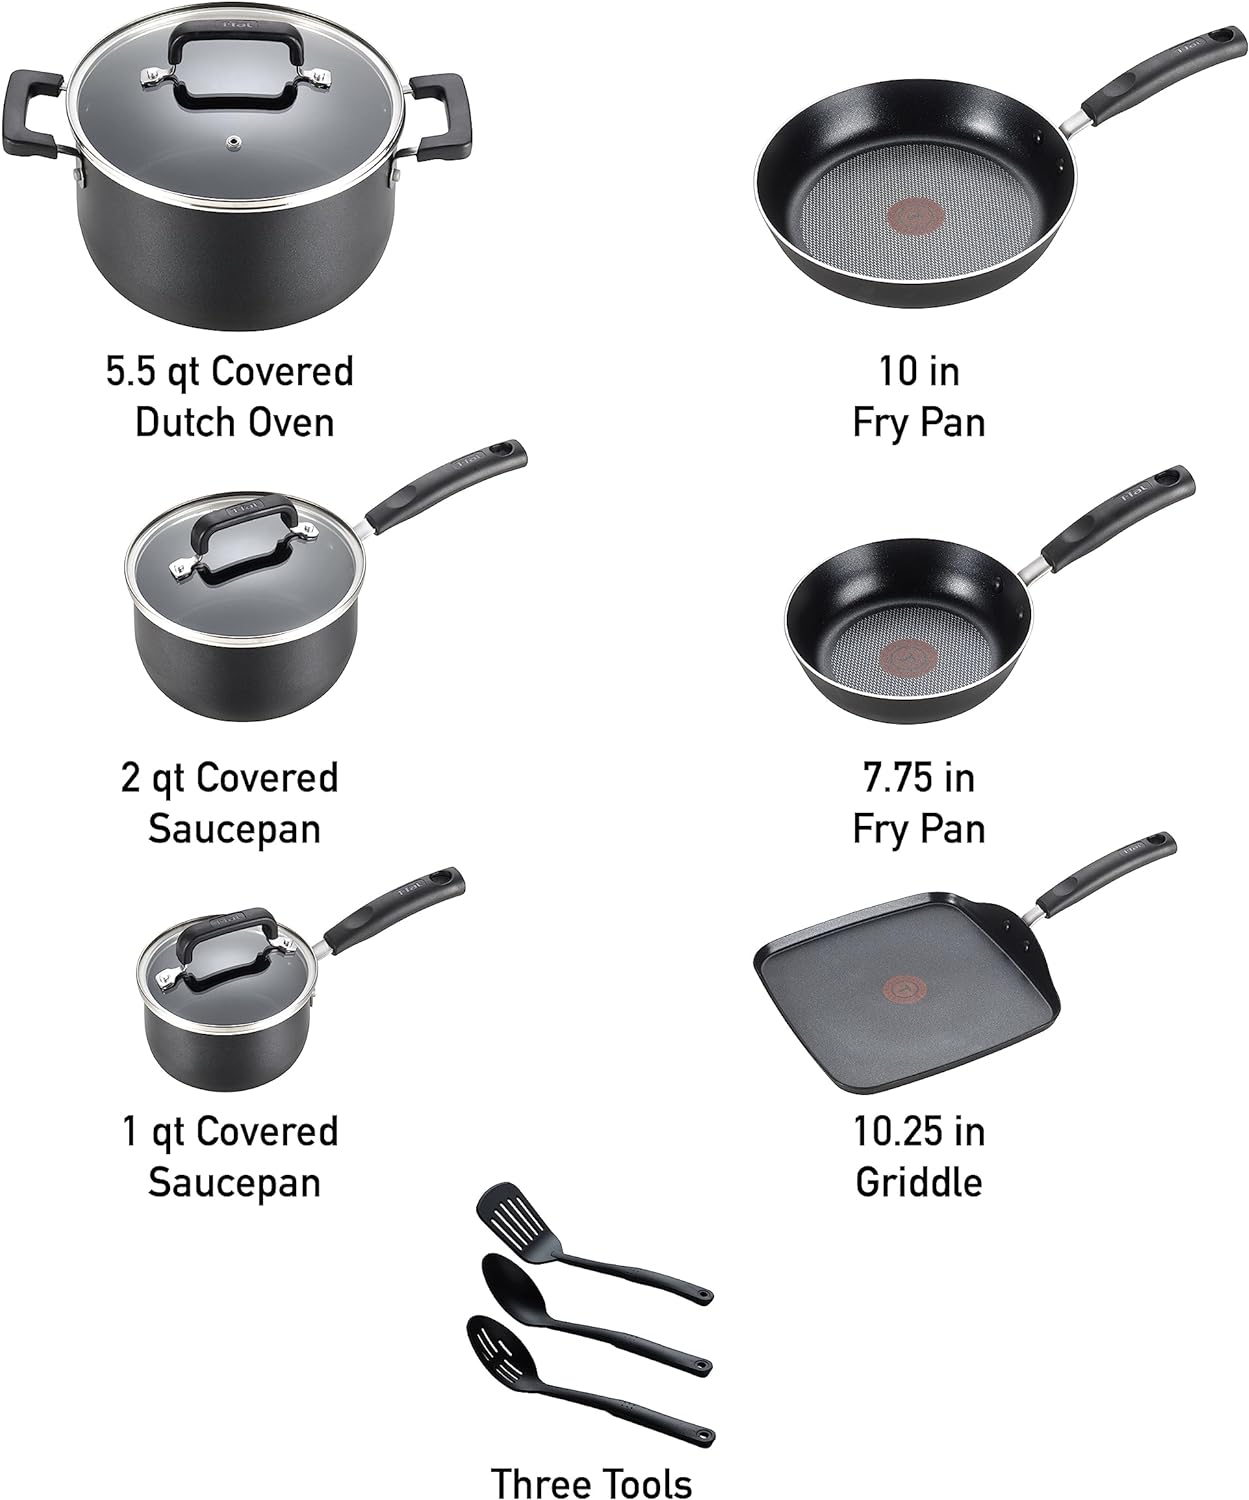 T-fal Signature Nonstick Cookware Set 12 Piece Oven Safe 350F Pots and Pans, Dishwasher Safe Black